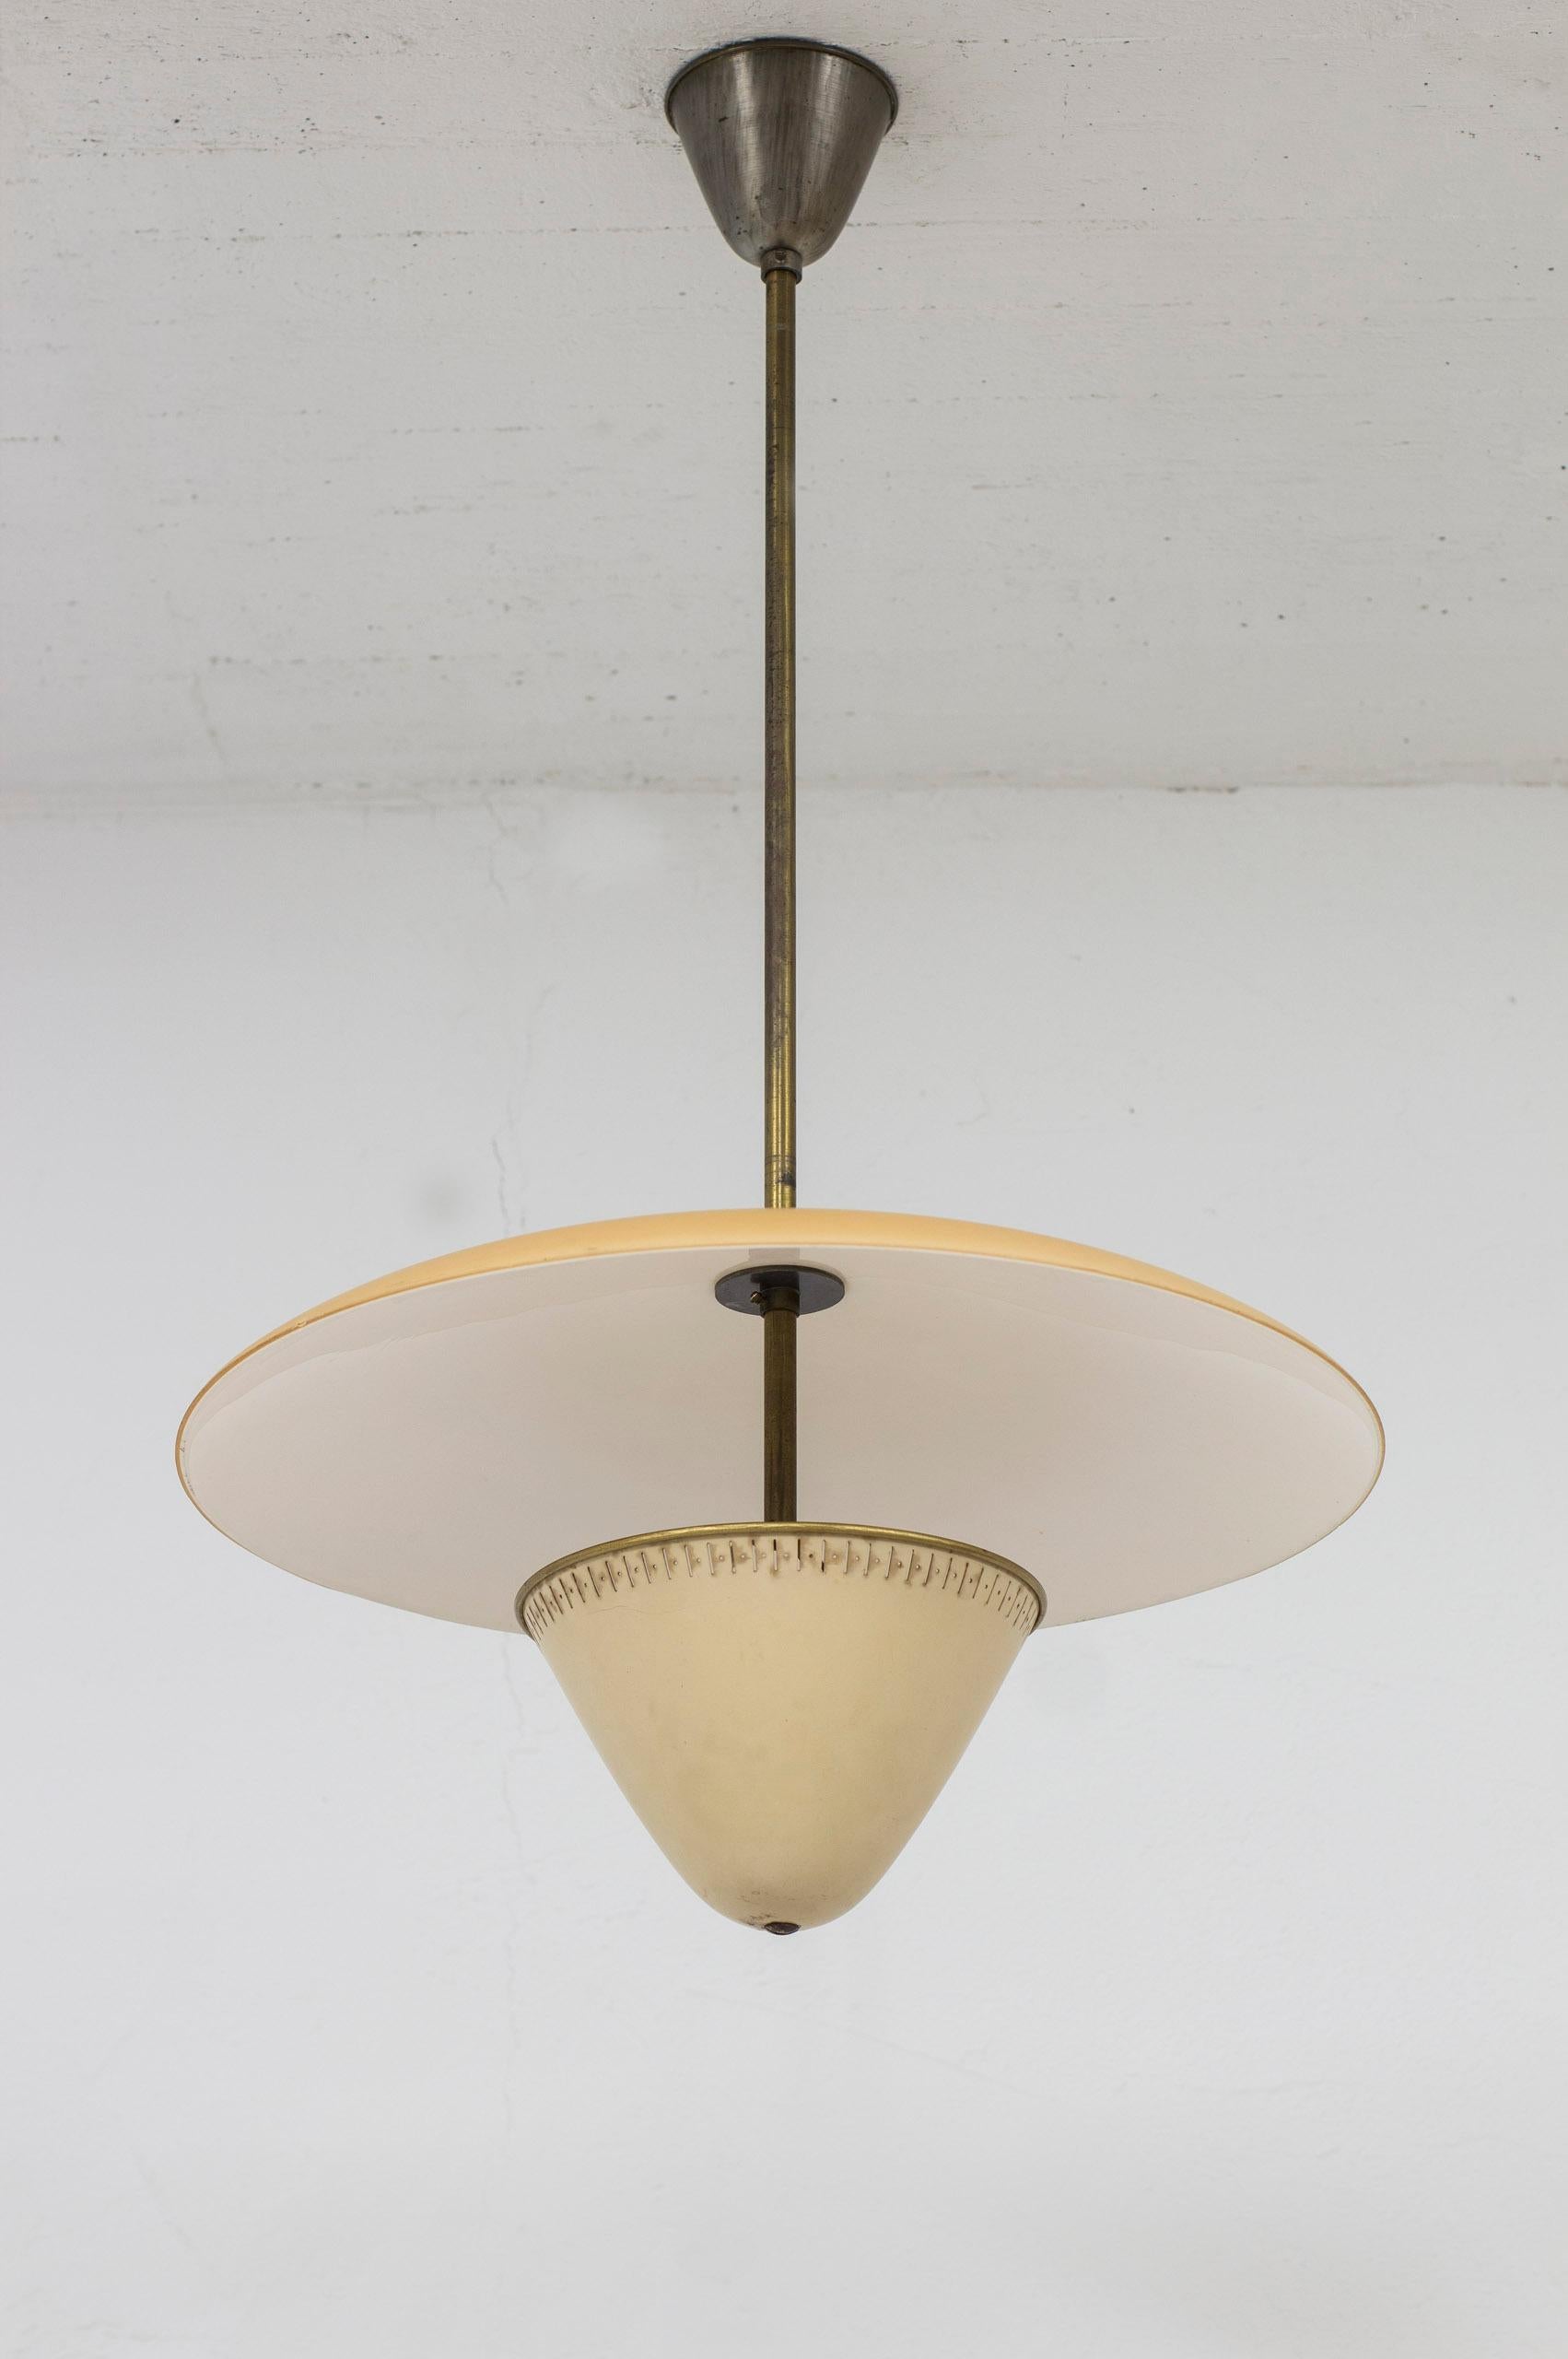 Scandinavian Modern Modernist ceiling lamp in brass and opal glass by ASEA belysning, Sweden, 1930s